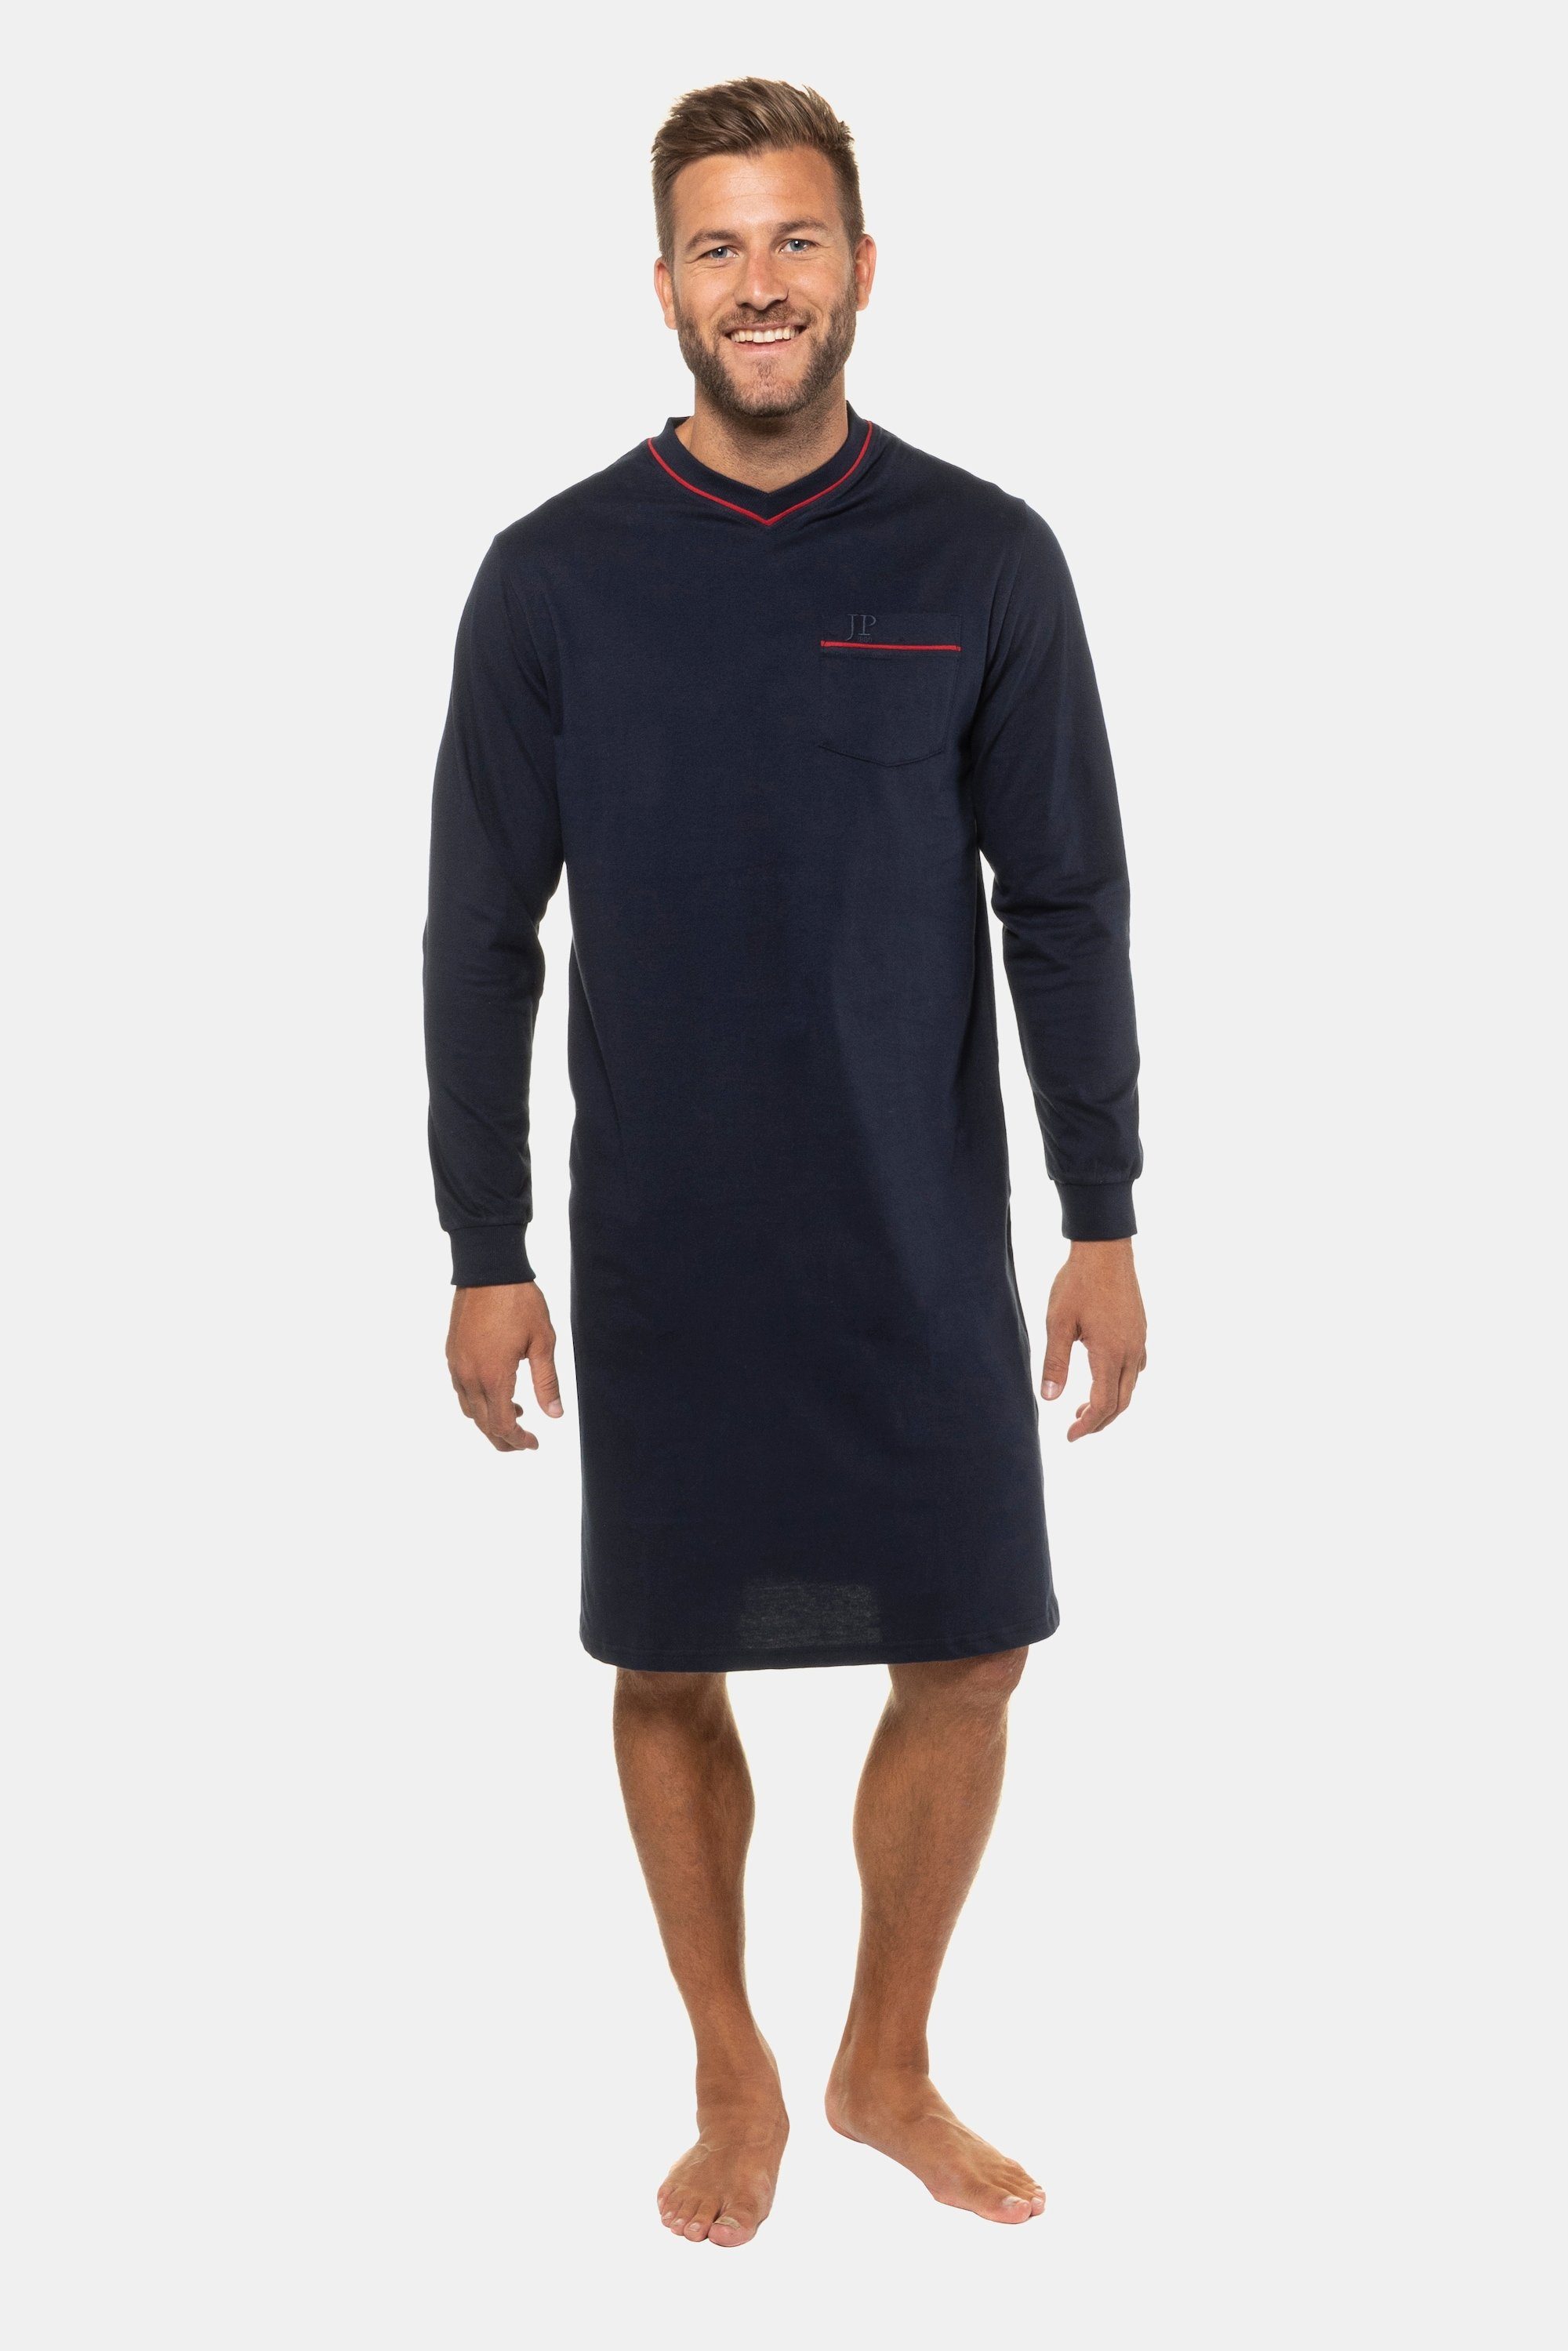 JP1880 Schlafanzug Nachthemd Homewear uni Langarm bis Gr 8XL dunkel marine